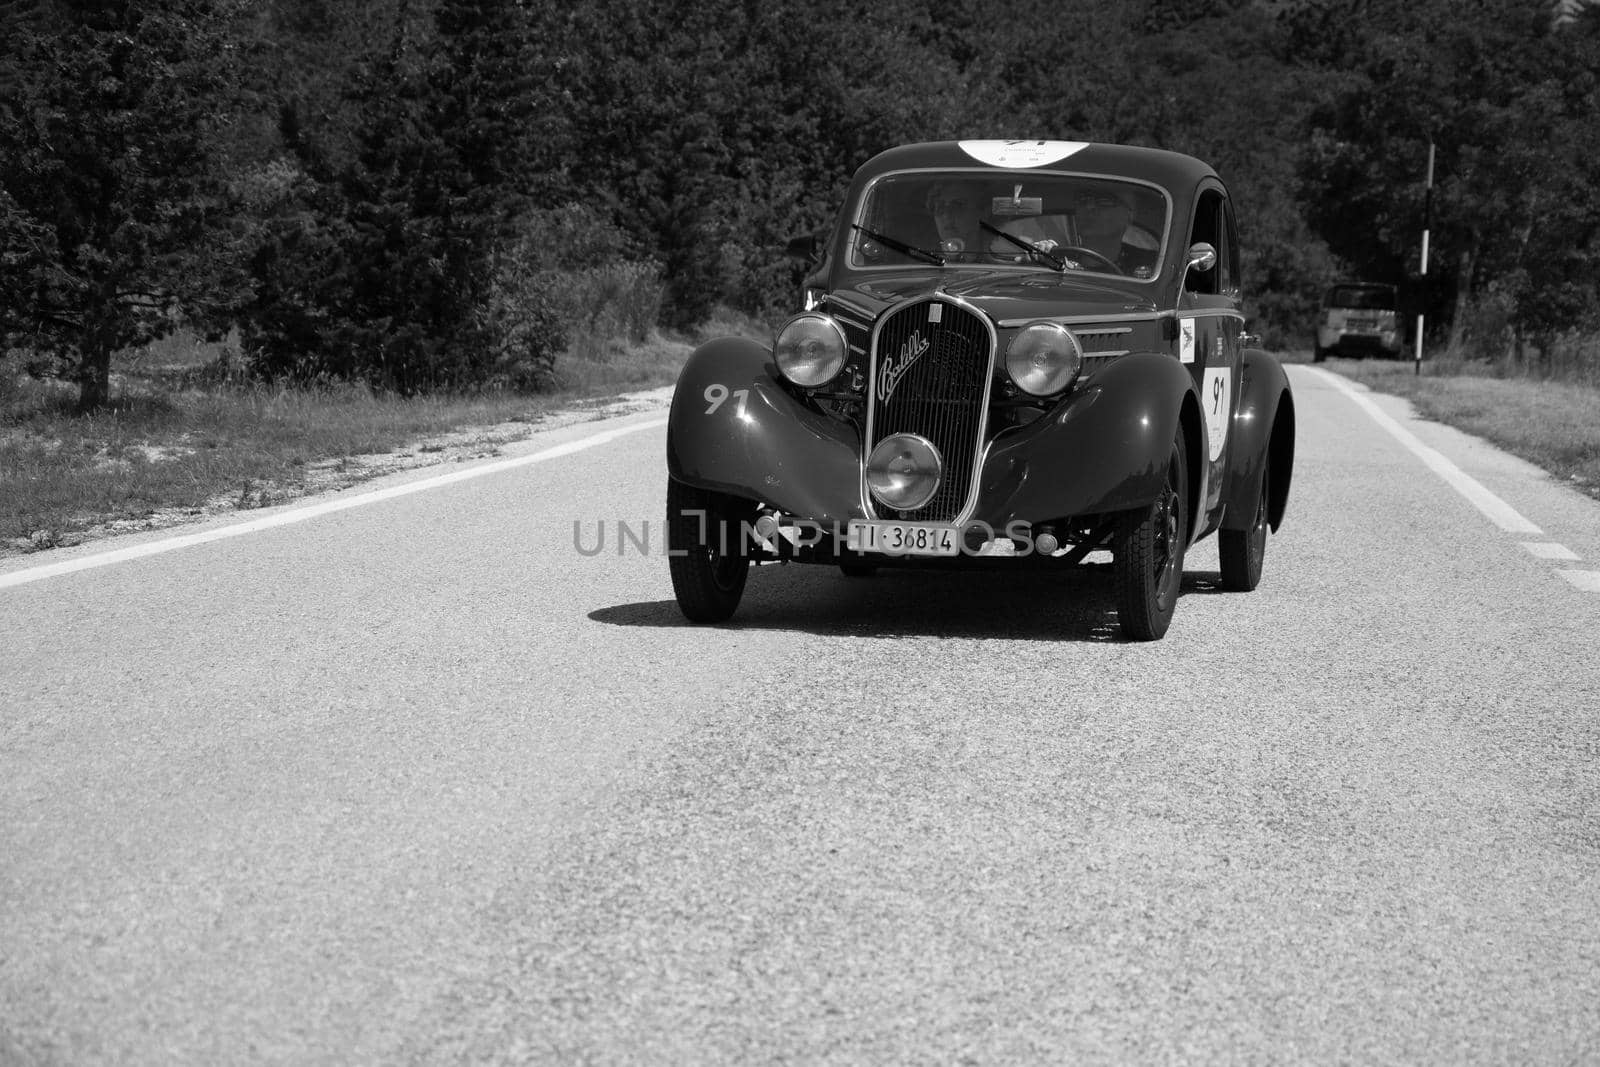 URBINO - ITALY - JUN 16 - 2022 : FIAT 508 S MM BALILLA BERLINETTA AERODINAMICA 1935 on an old racing car in rally Mille Miglia 2022 the famous italian historical race (1927-1957